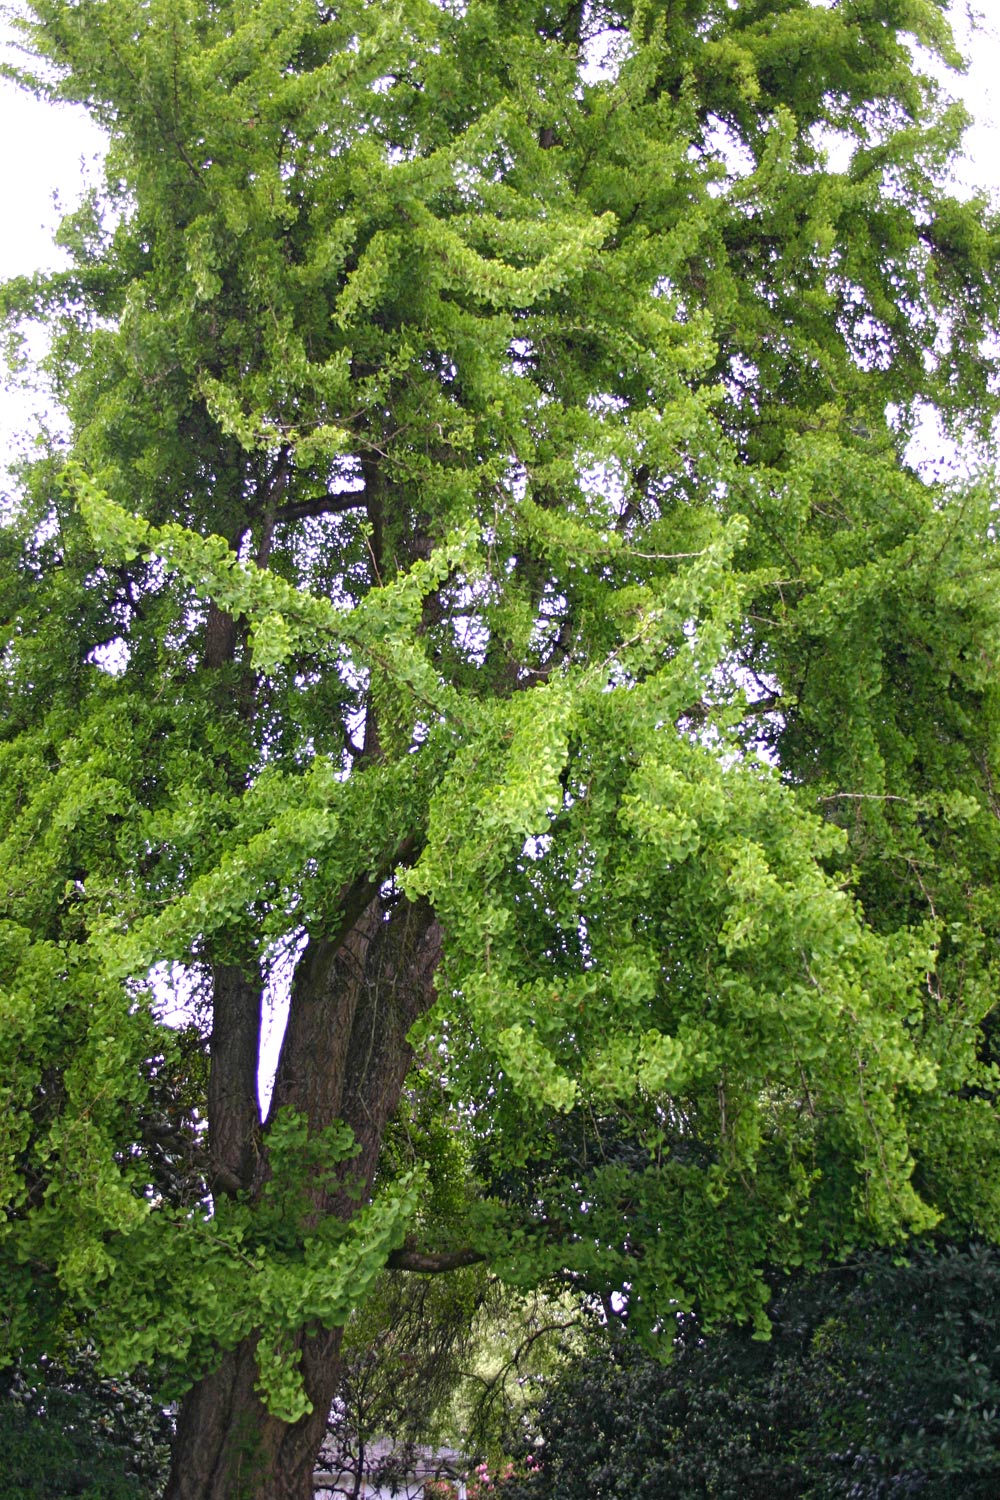 Ginkgo biloba - Ginkgo, Maidenhair Tree, Sacred Tree, Live Fossil